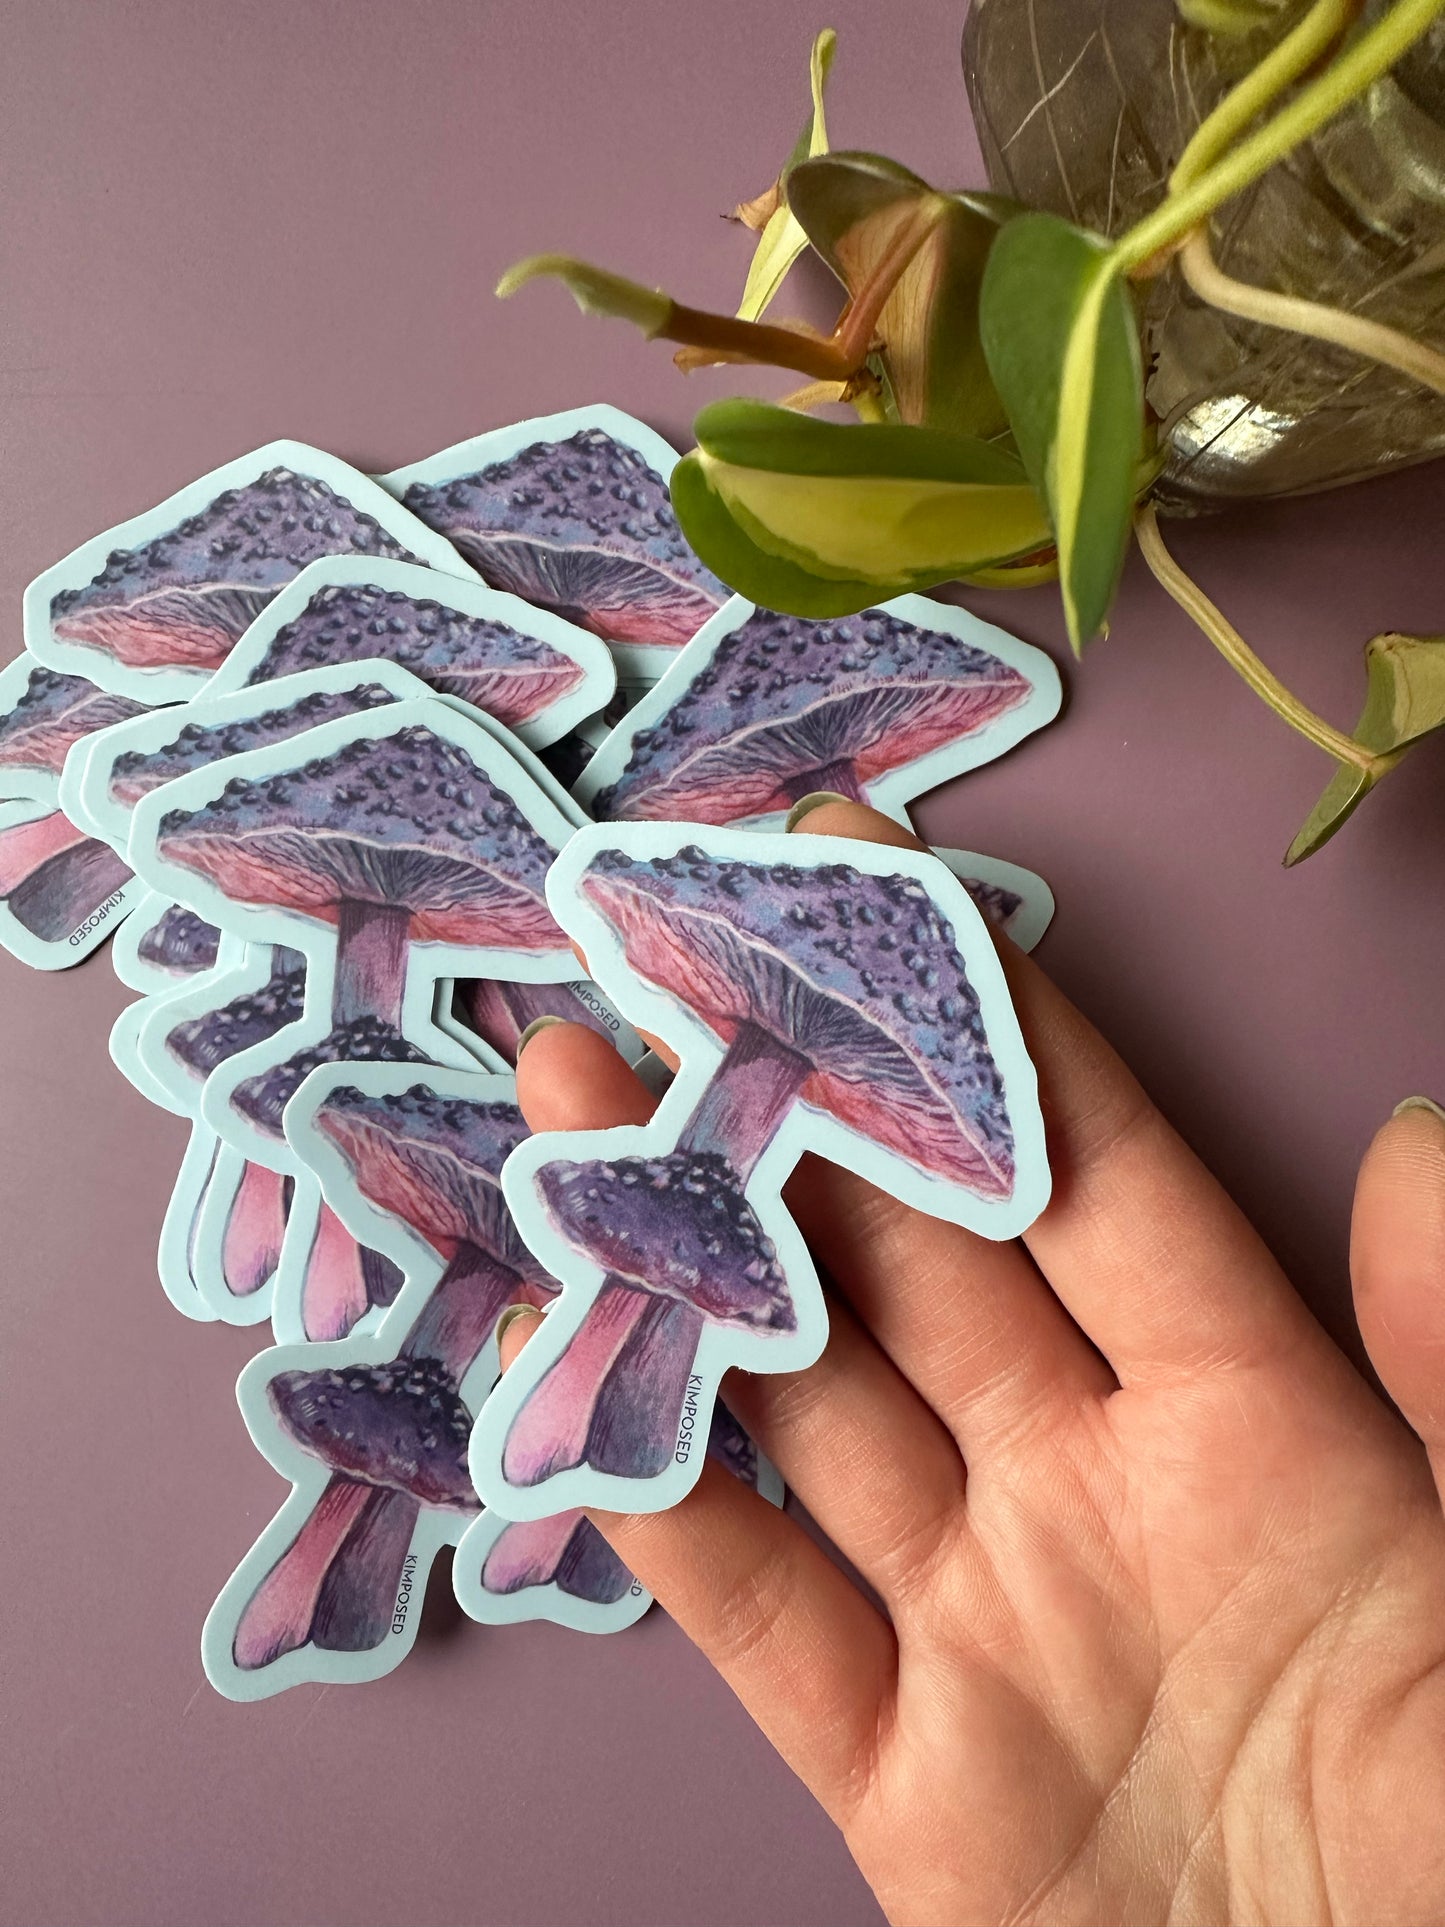 Purple Magic Mushroom Sticker